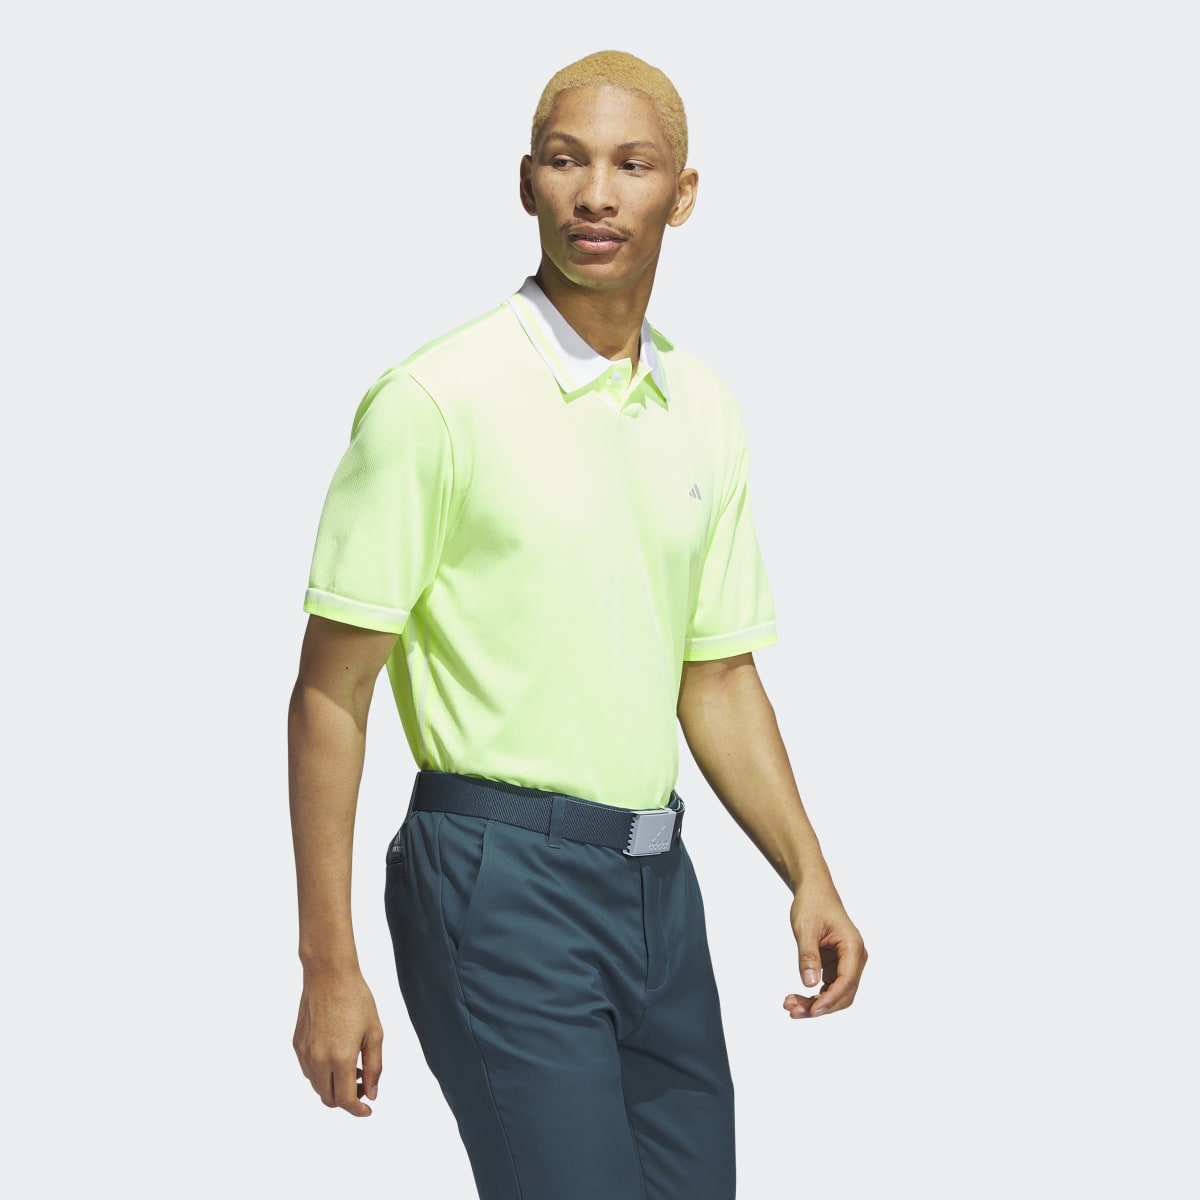 Adidas Ultimate365 Tour PRIMEKNIT Golf Polo Shirt. 6